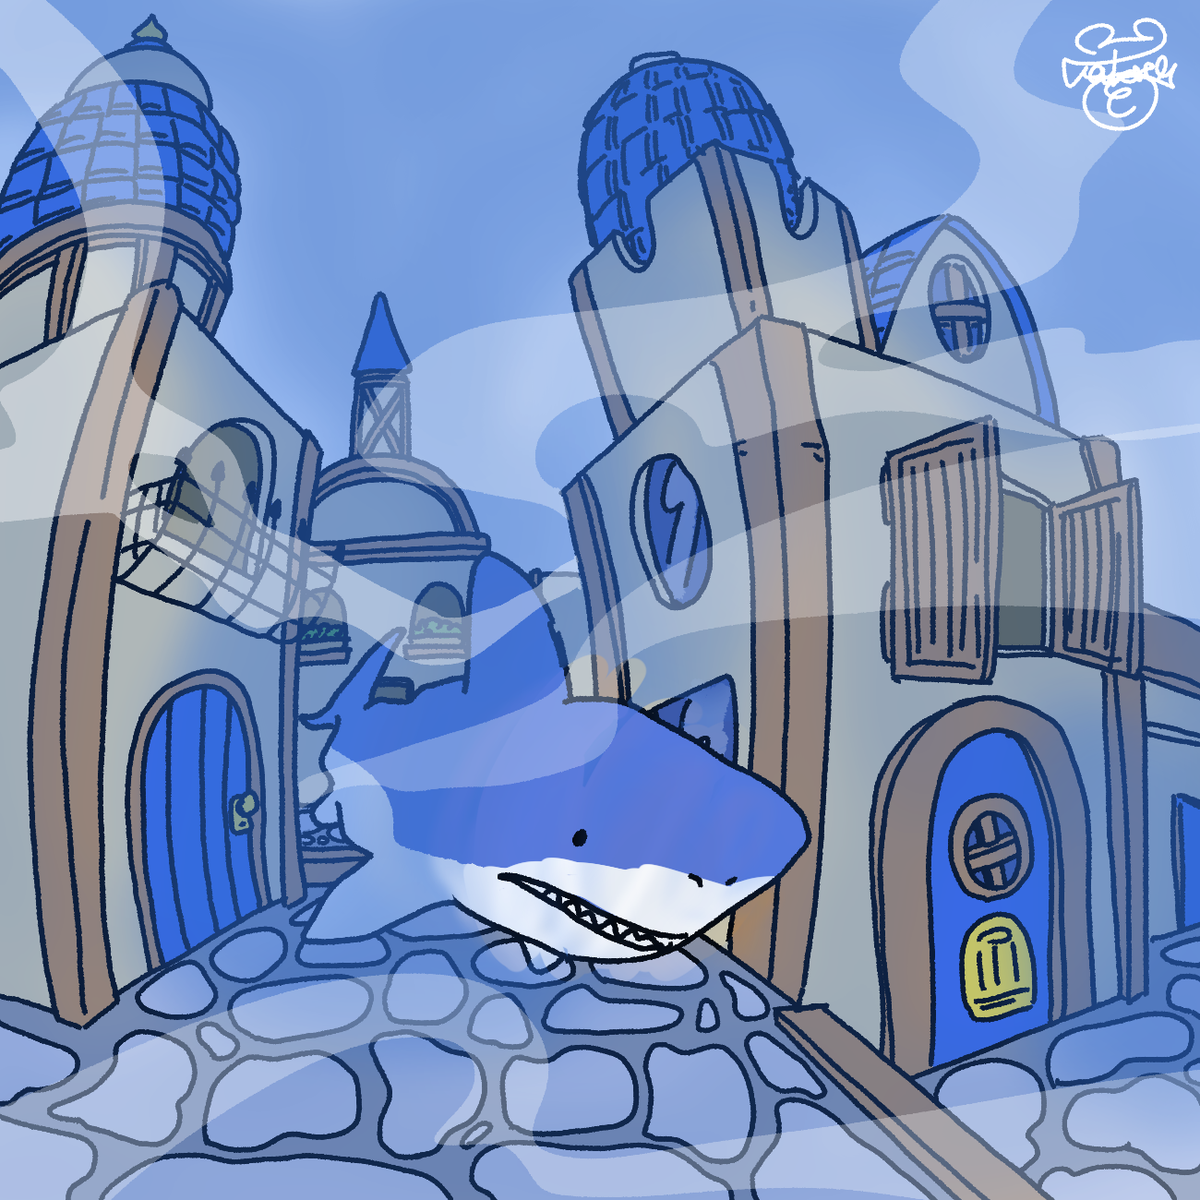 「Shark and town。 」|wakuta│イラストレーターのイラスト